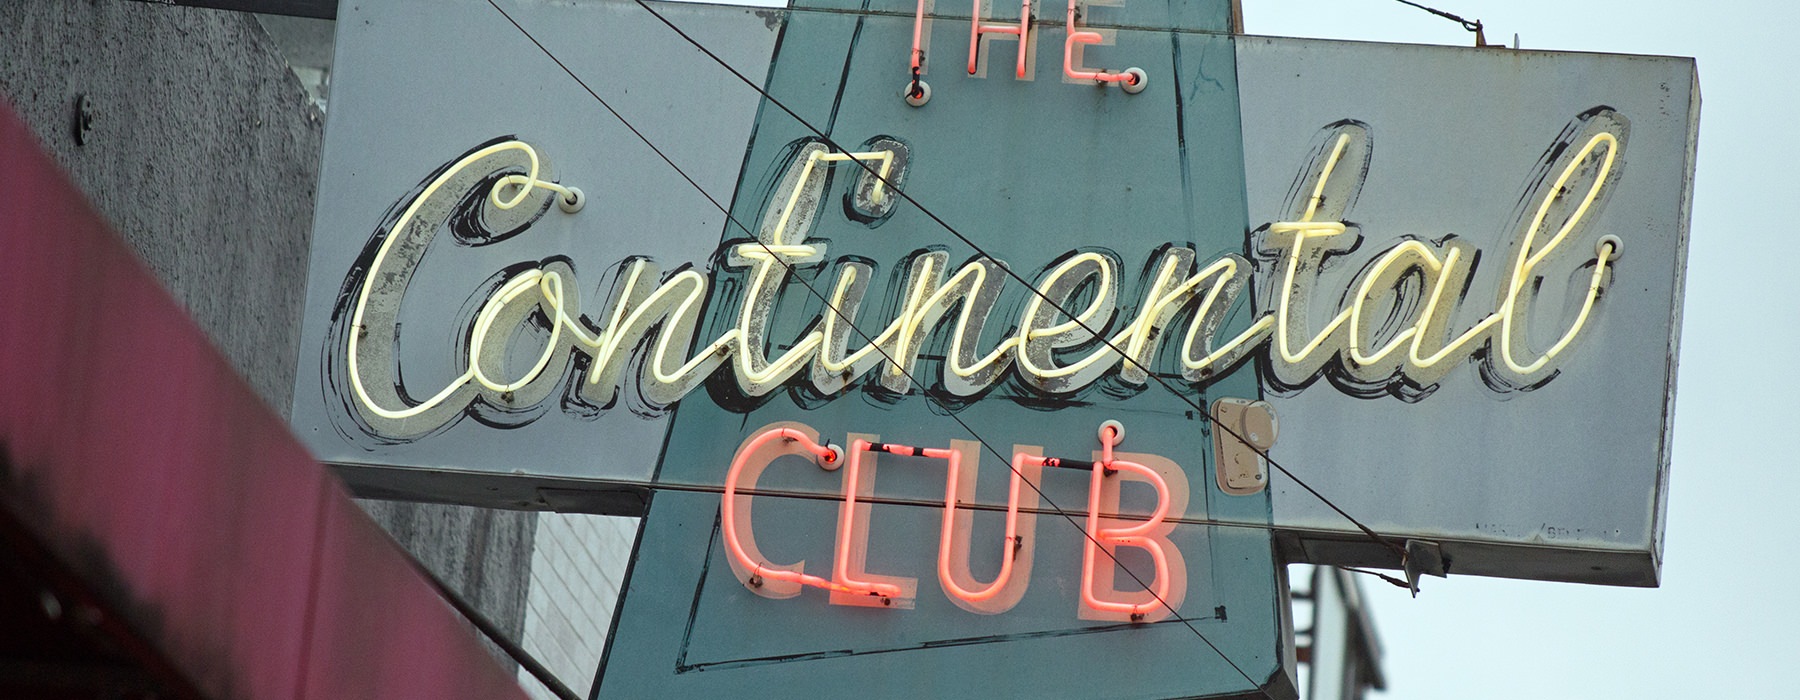 Continental Club sign 